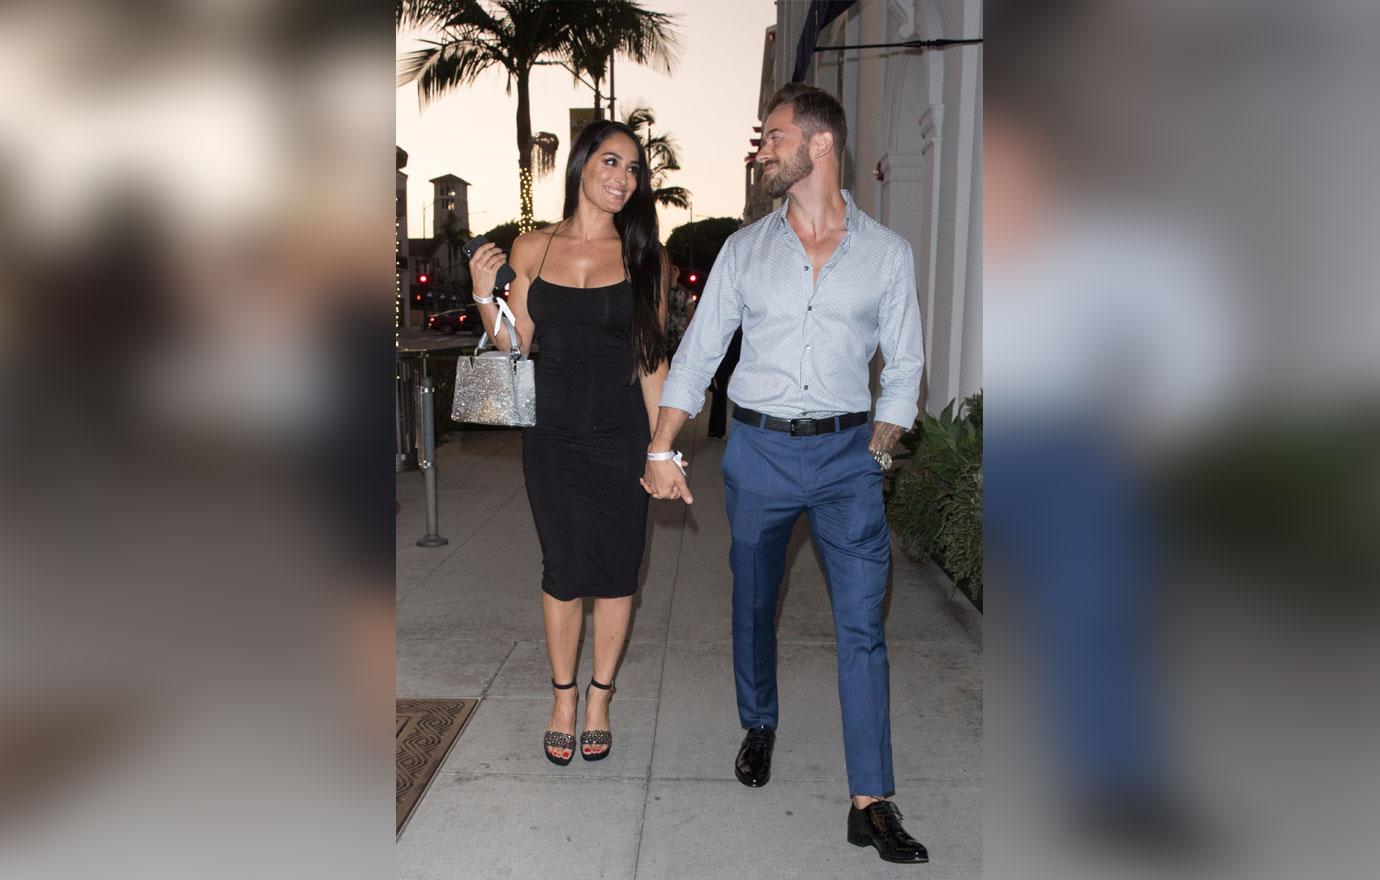 Nikki Bella and Artem Chigvintsev Dress Up for Date Night in L.A.